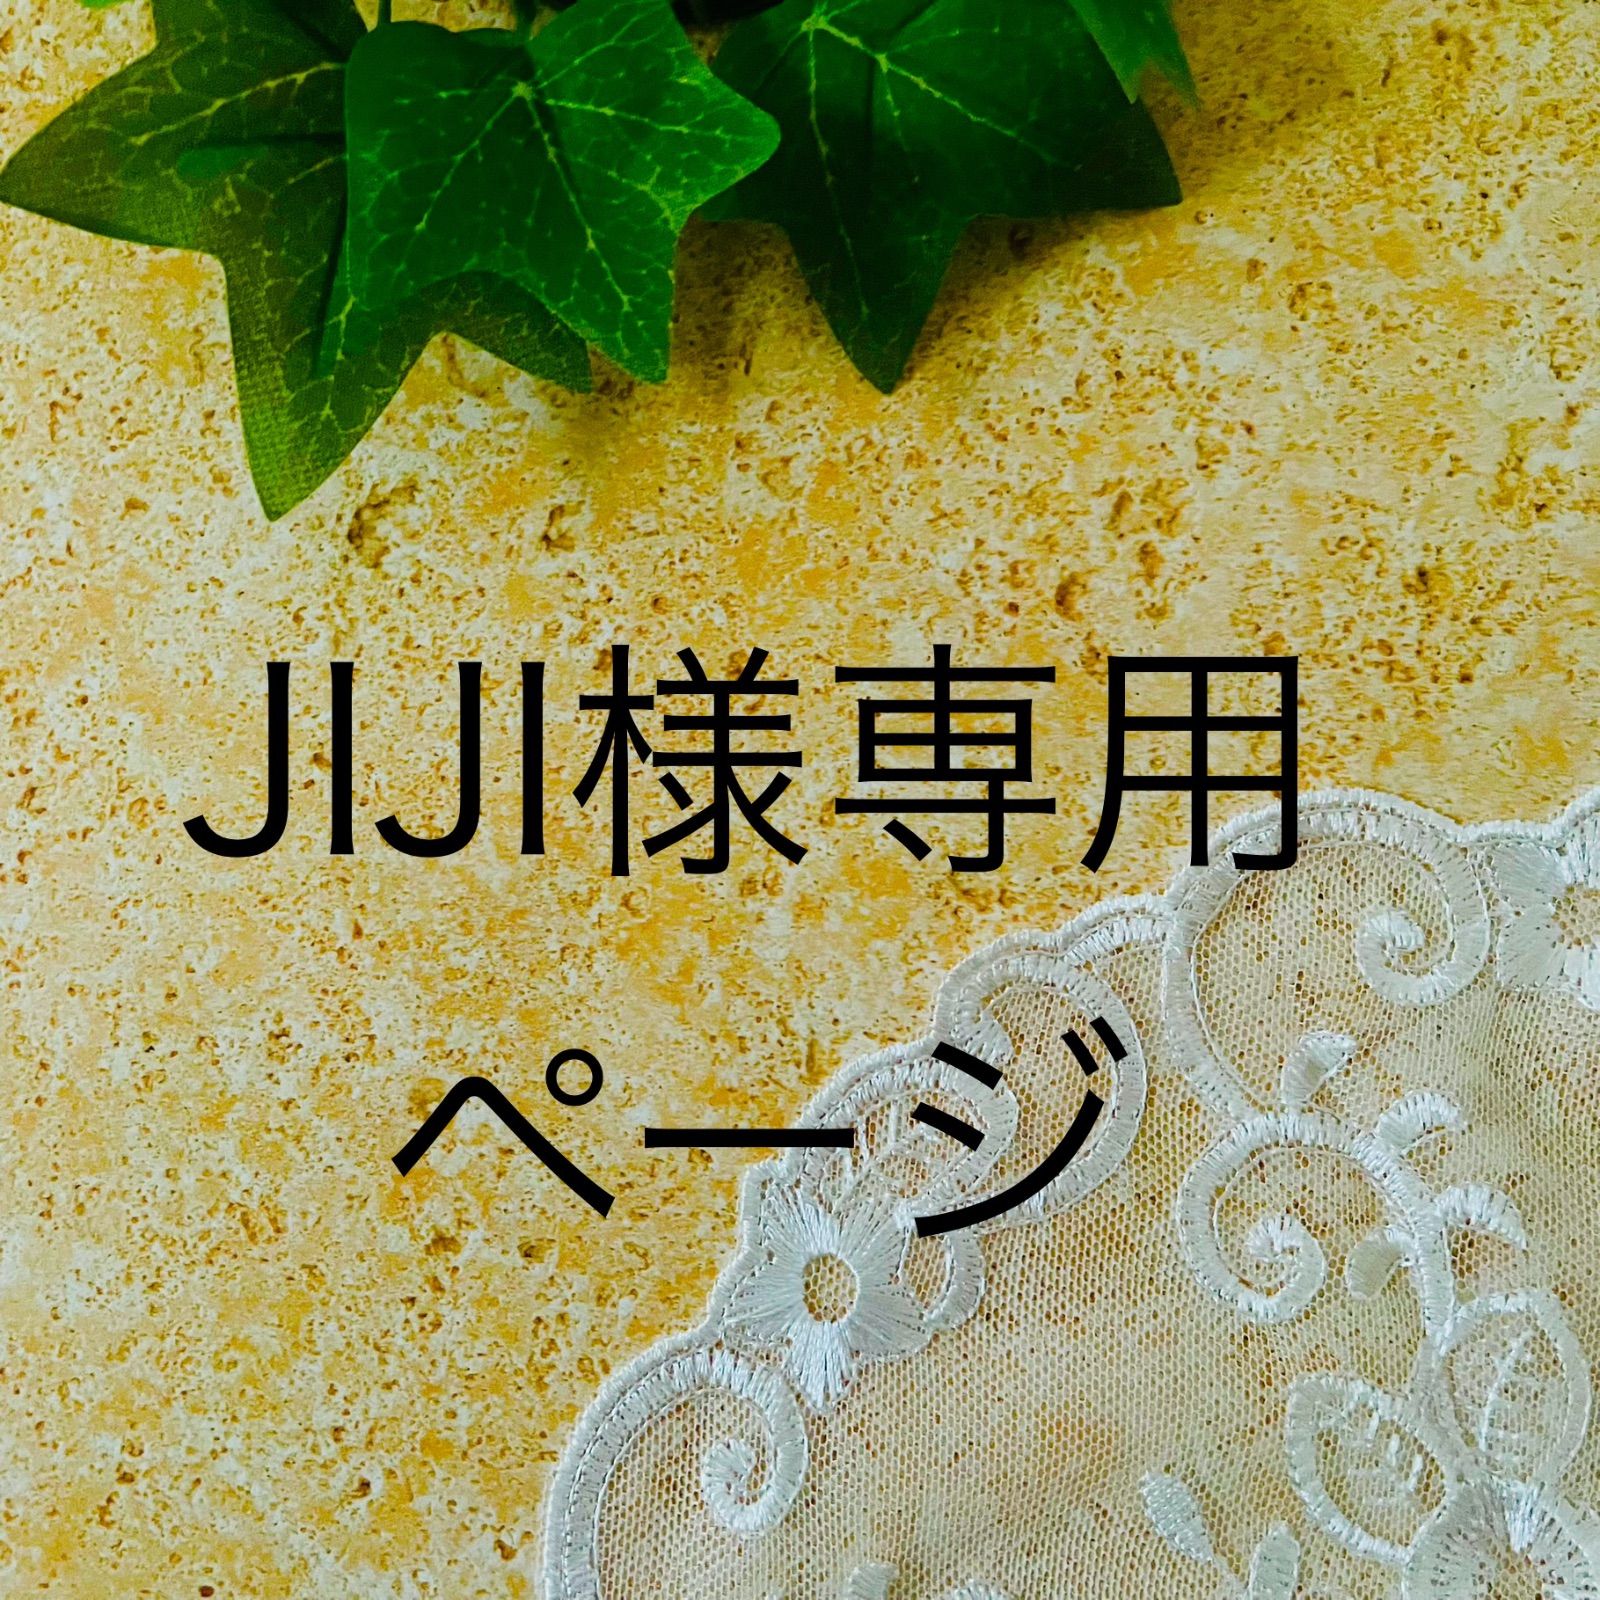 JIJI様専用ページ - メルカリ